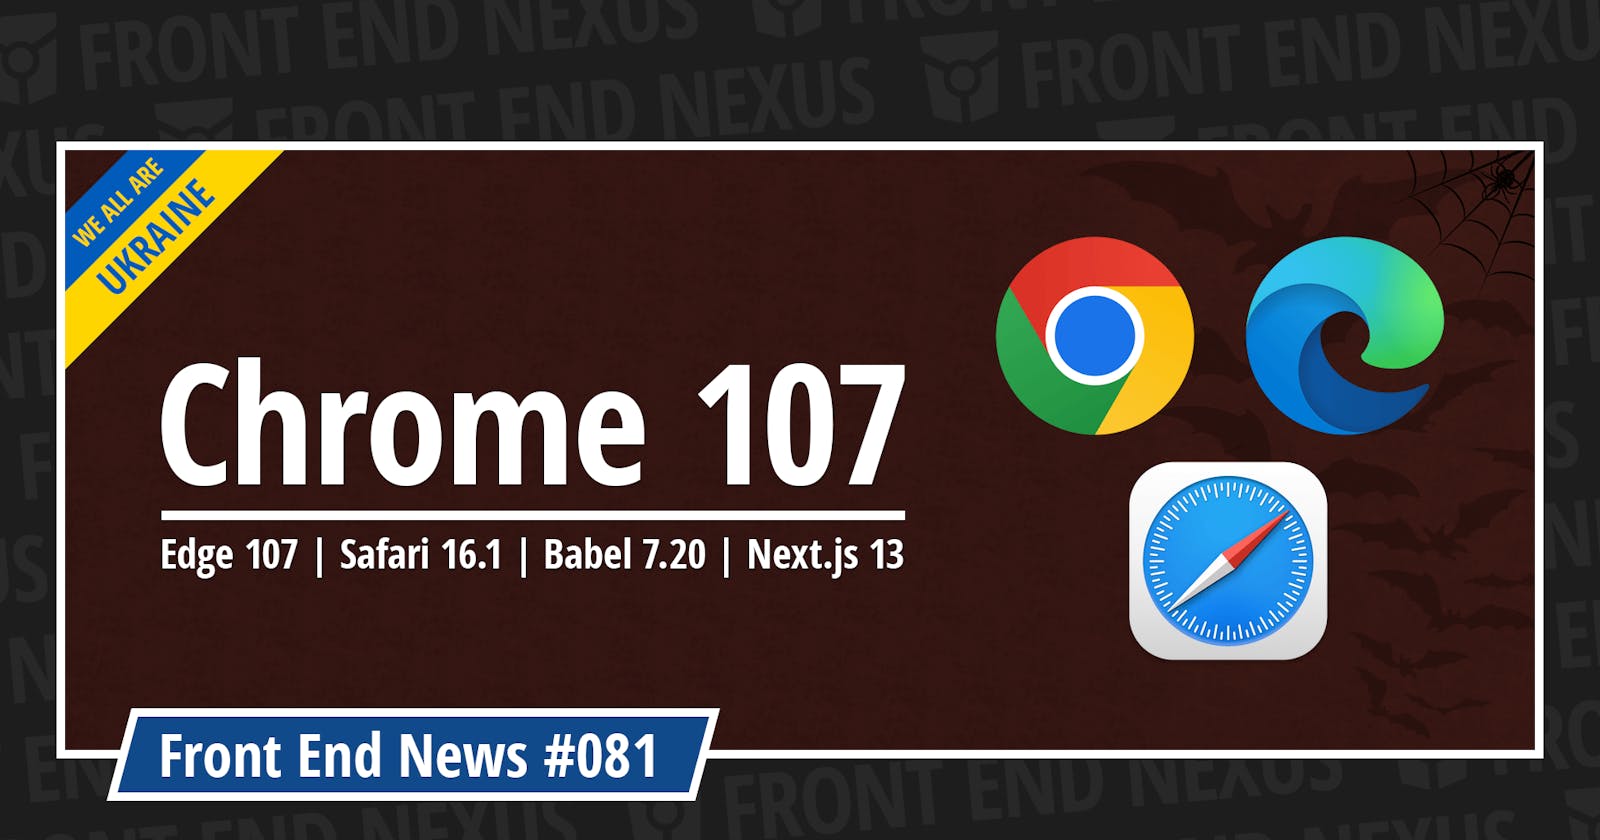 Chrome 107, Edge 107, Safari 16.1, Babel 7.20, Next.js 13, and more | Front End News #081